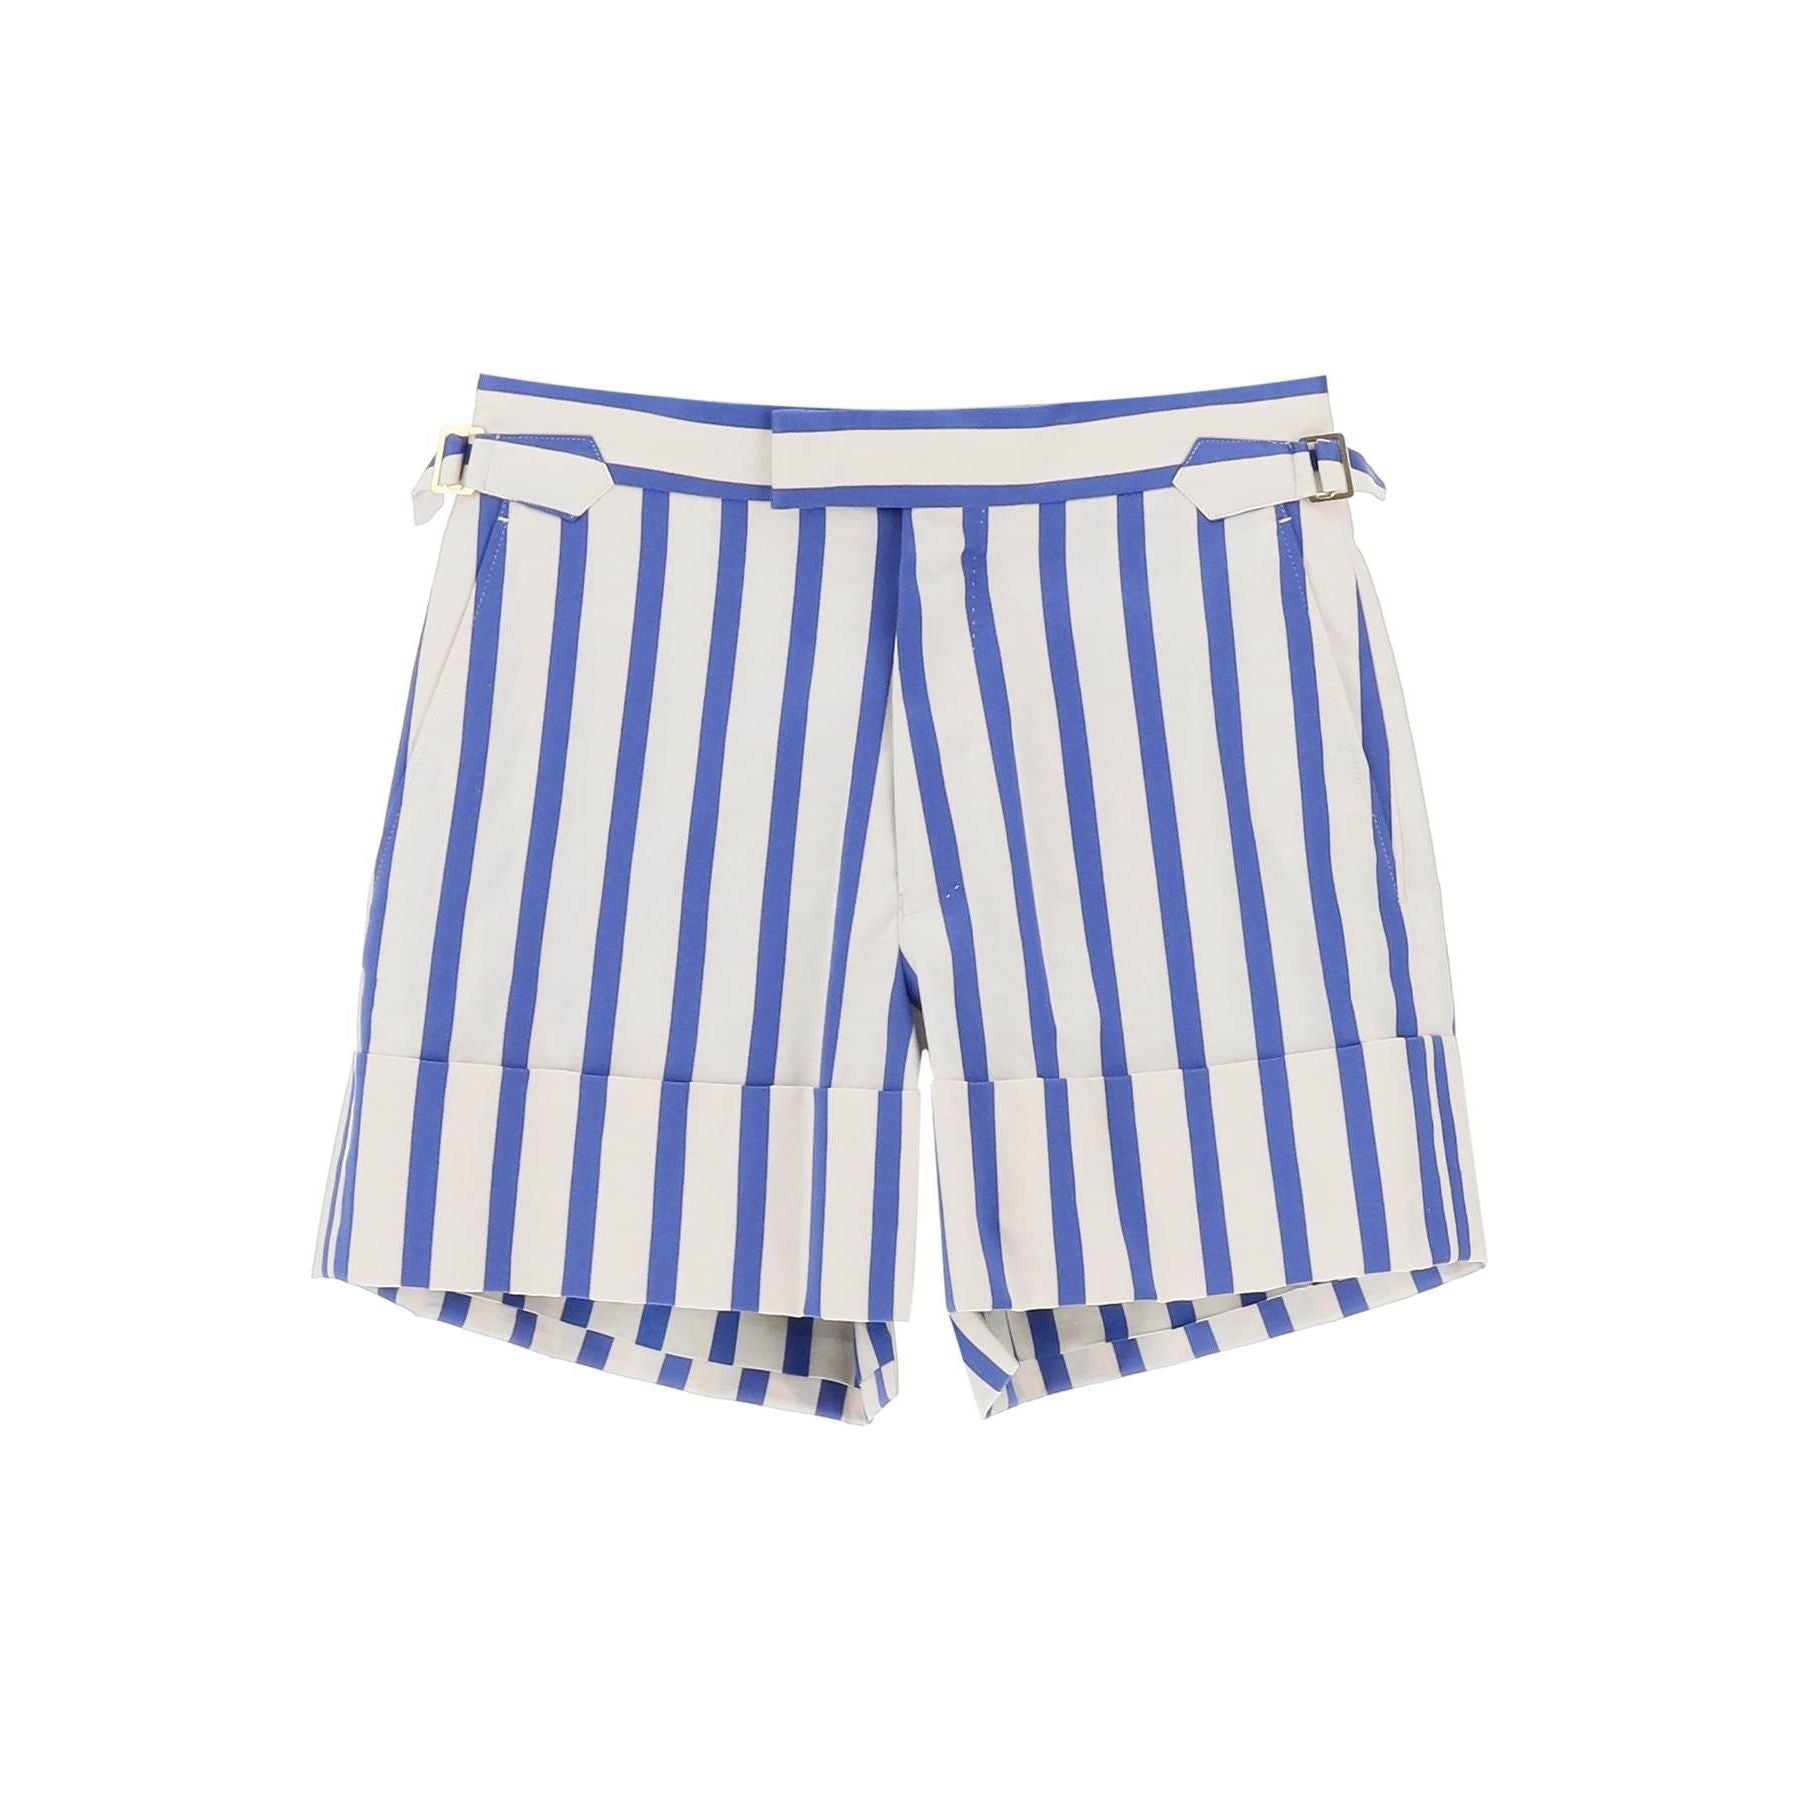 'Bertram' Striped Shorts